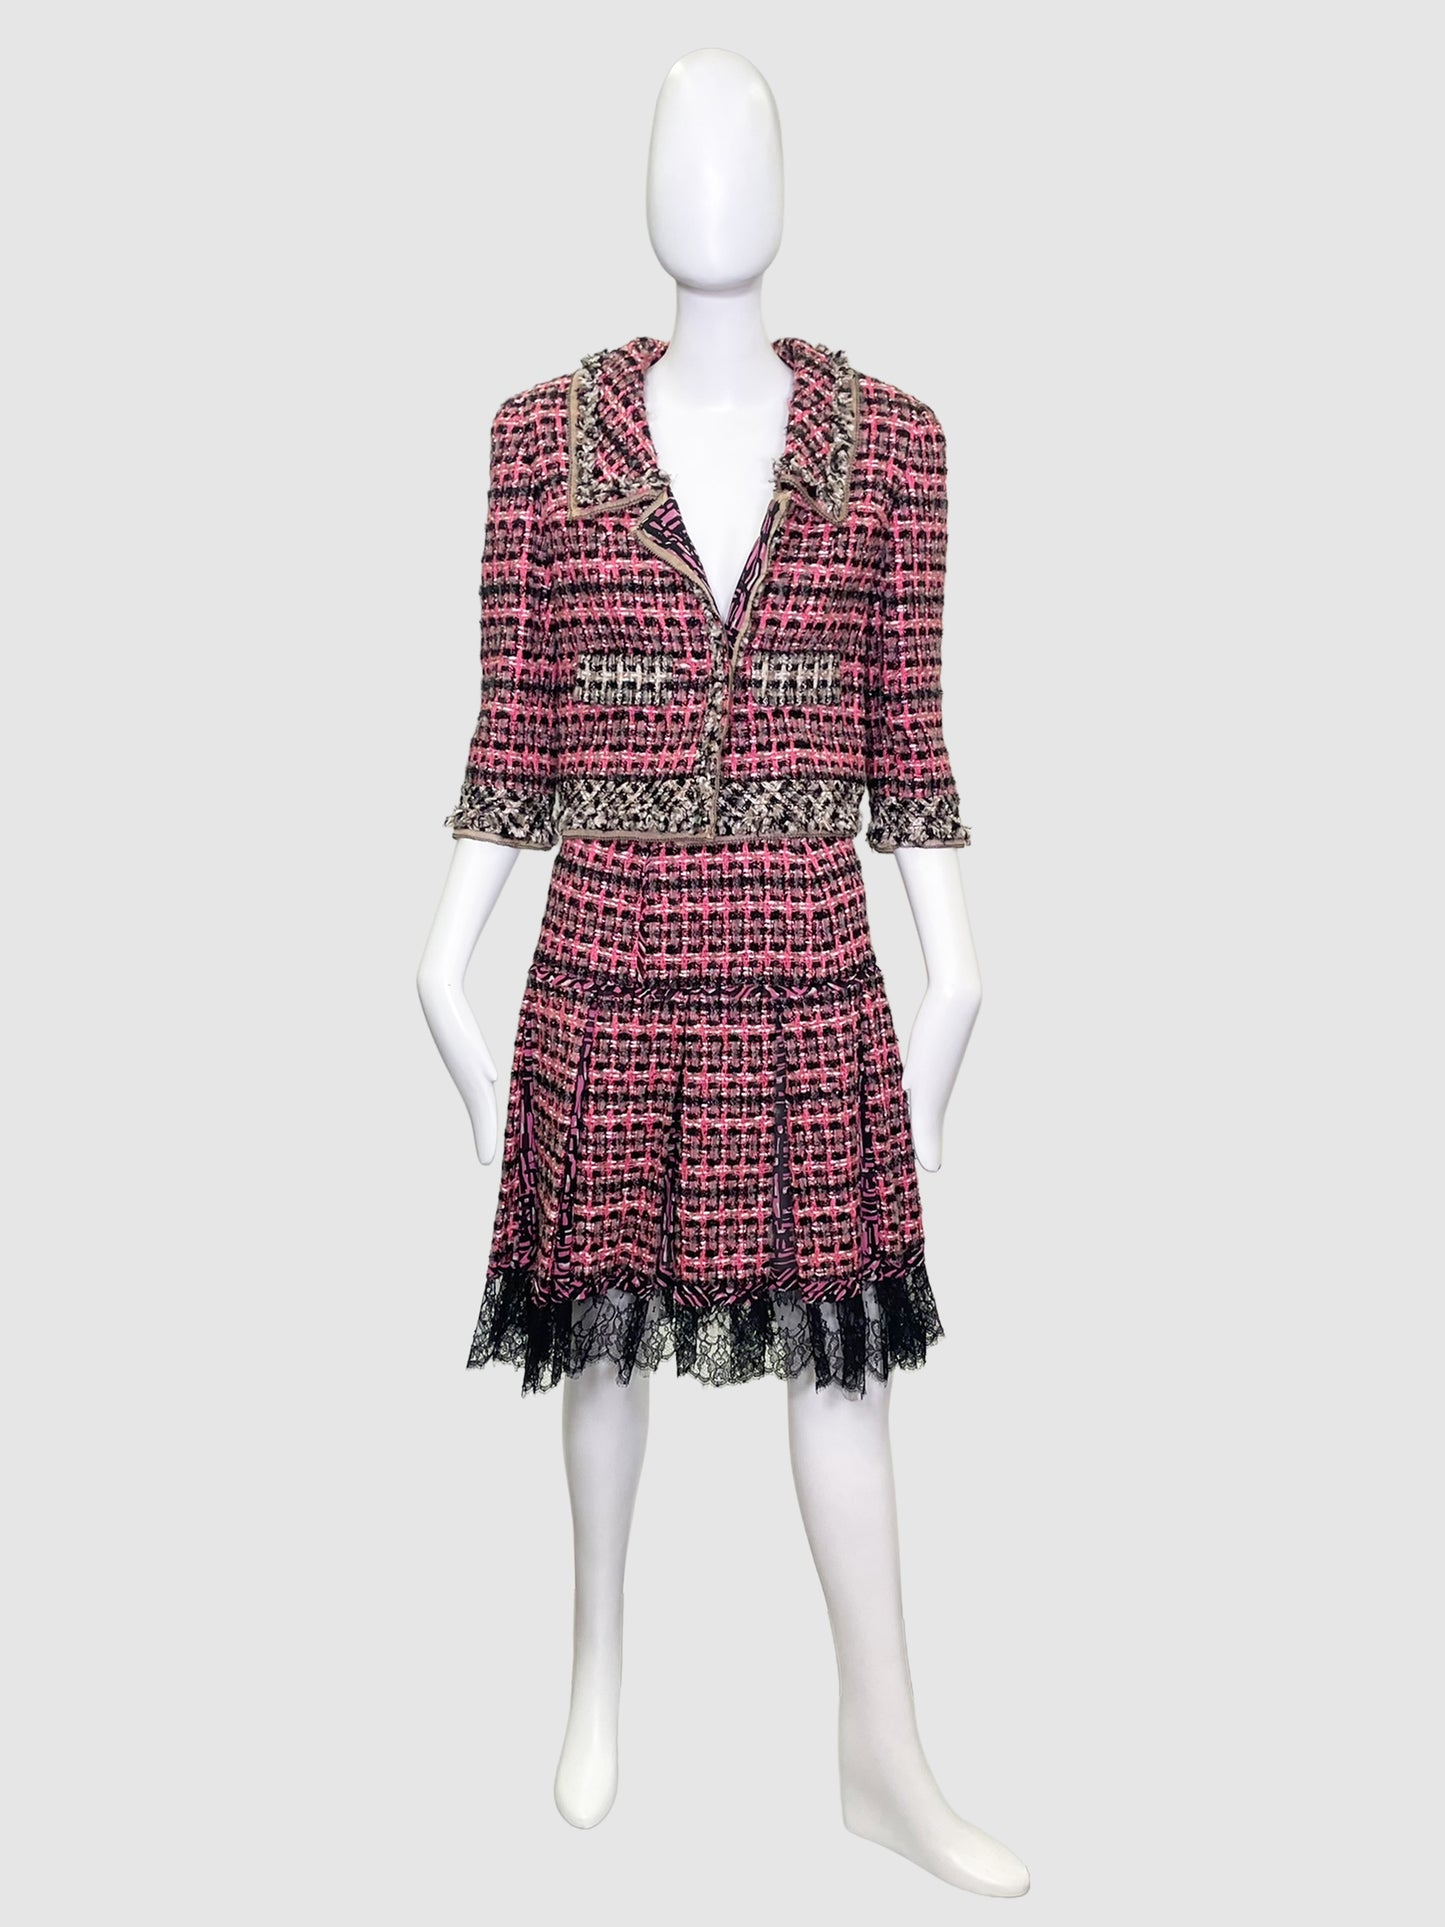 Oscar de la Renta Tweed Jacket and Skirt 2-Piece Set - Size 10